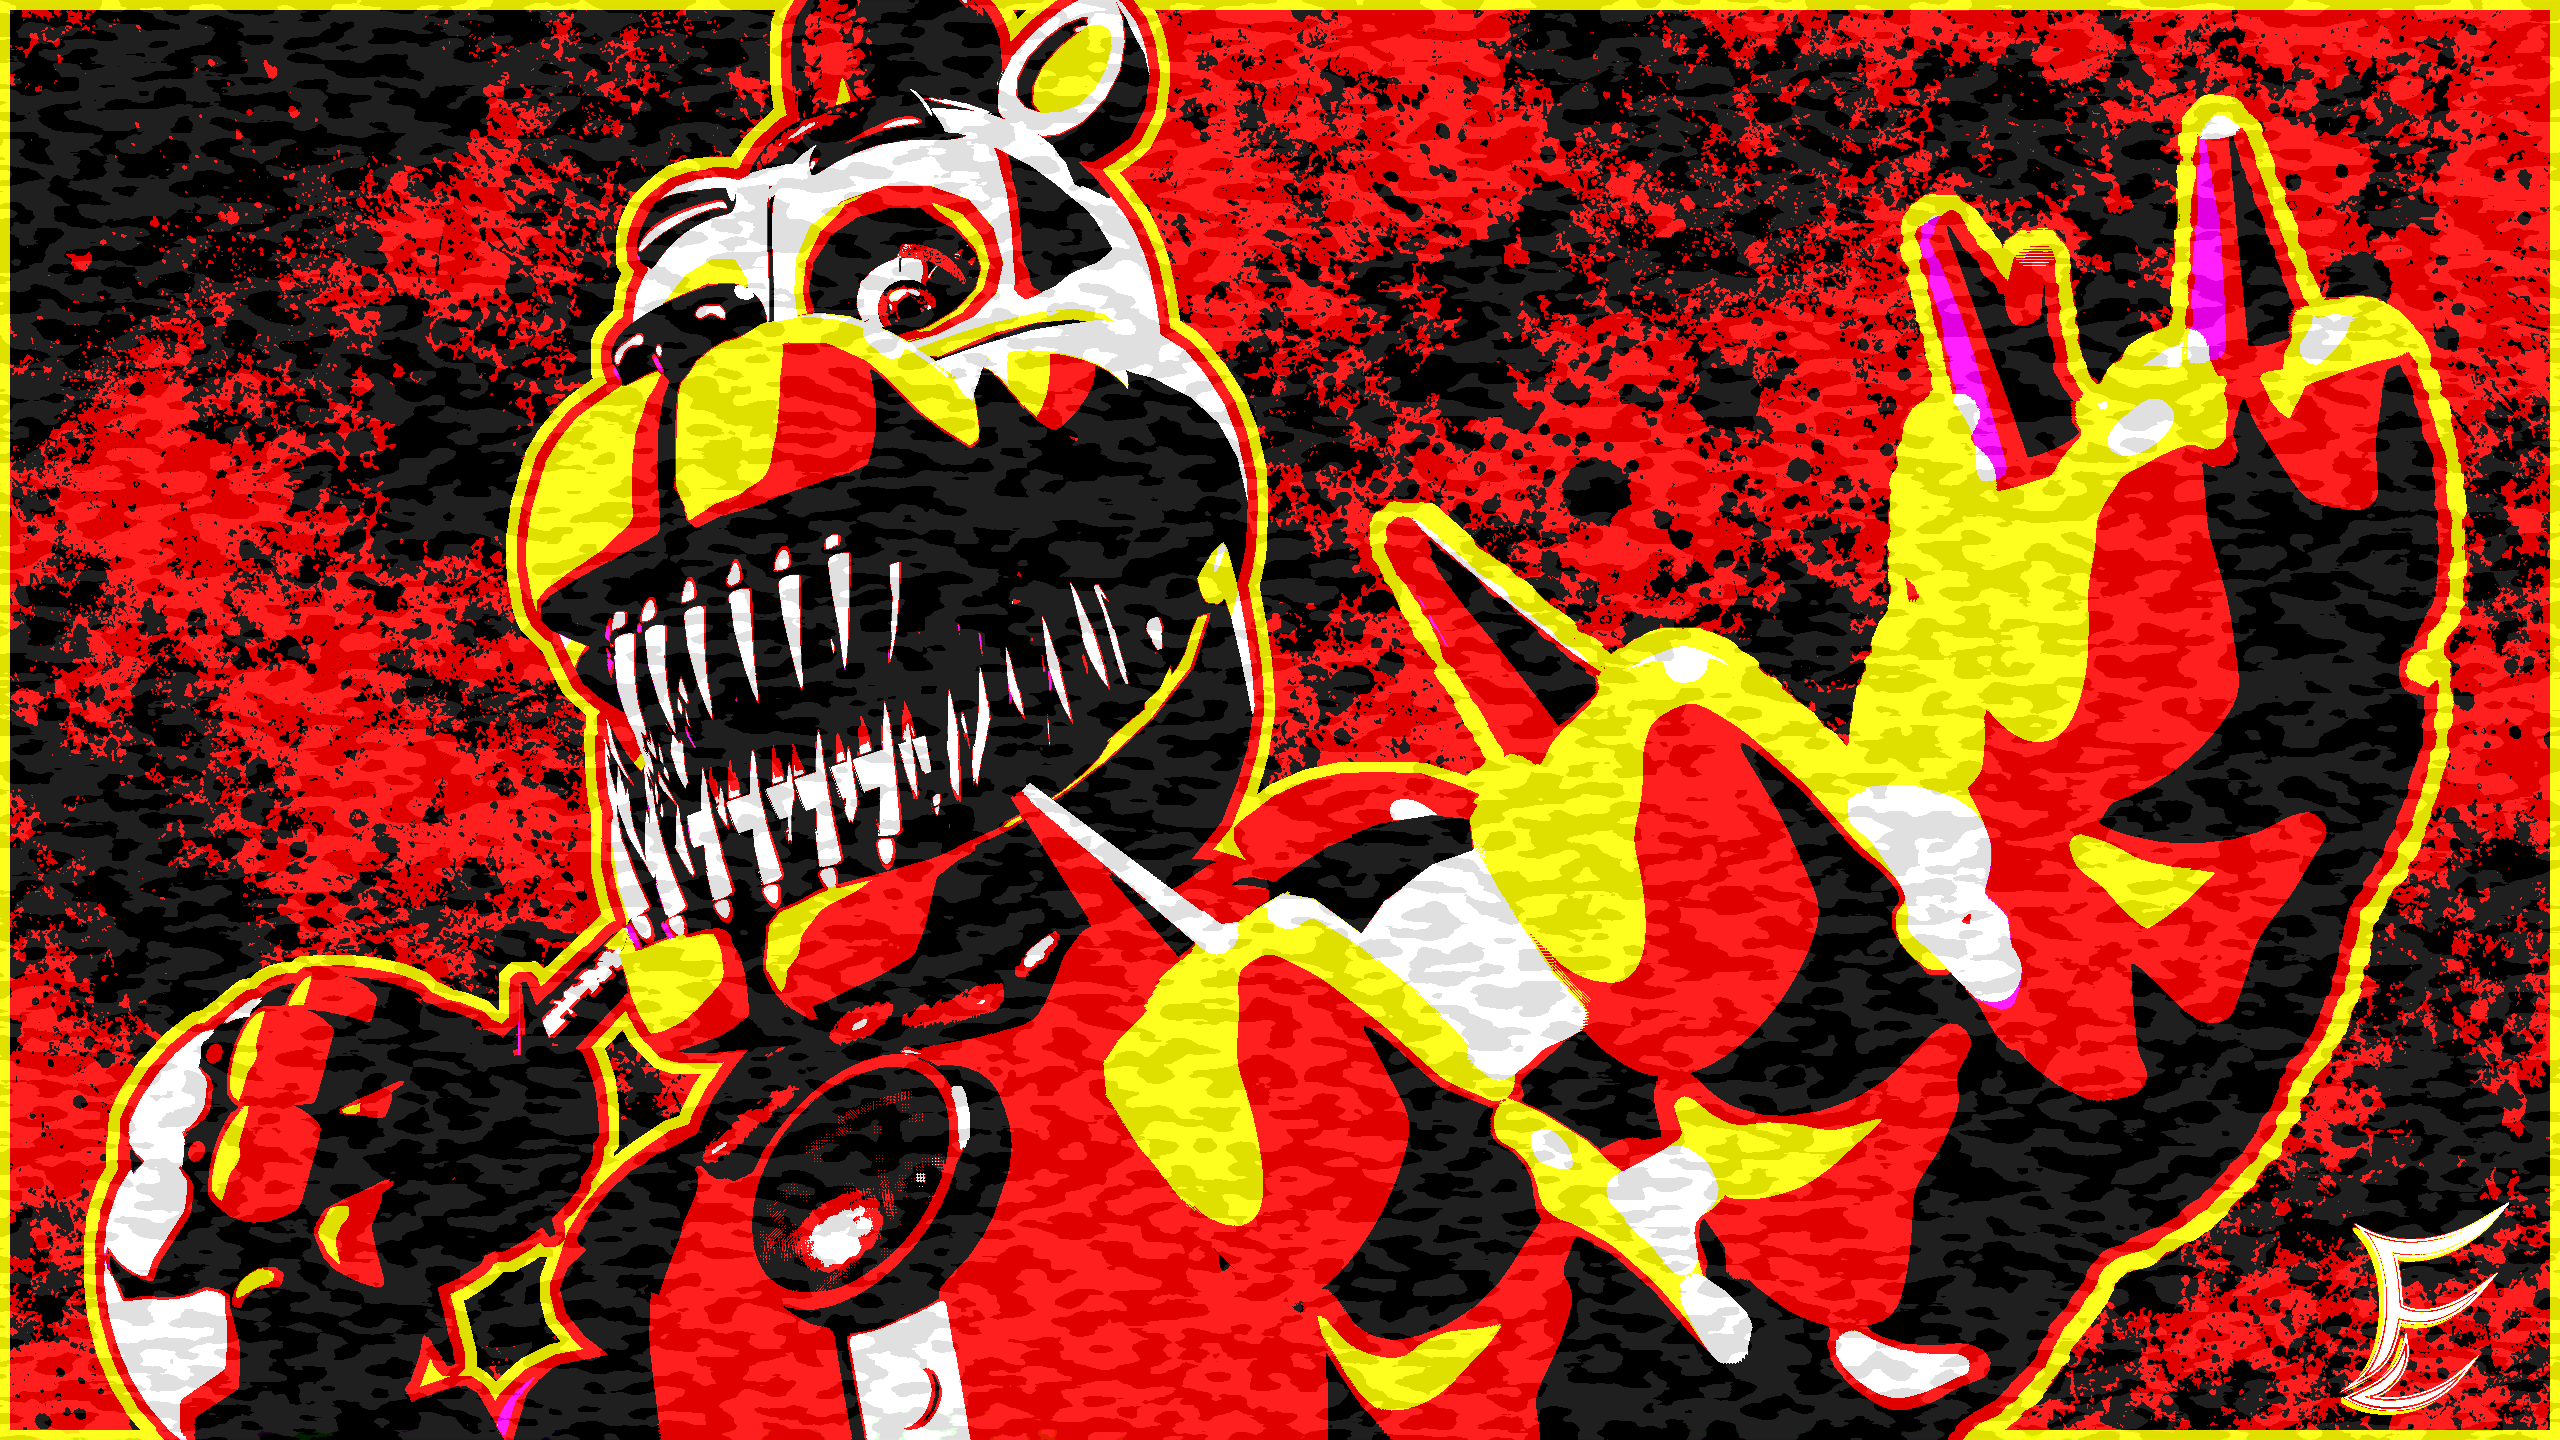 SFM FNaF's 4] Nightmare Wallpaper by FlamerL13 on DeviantArt